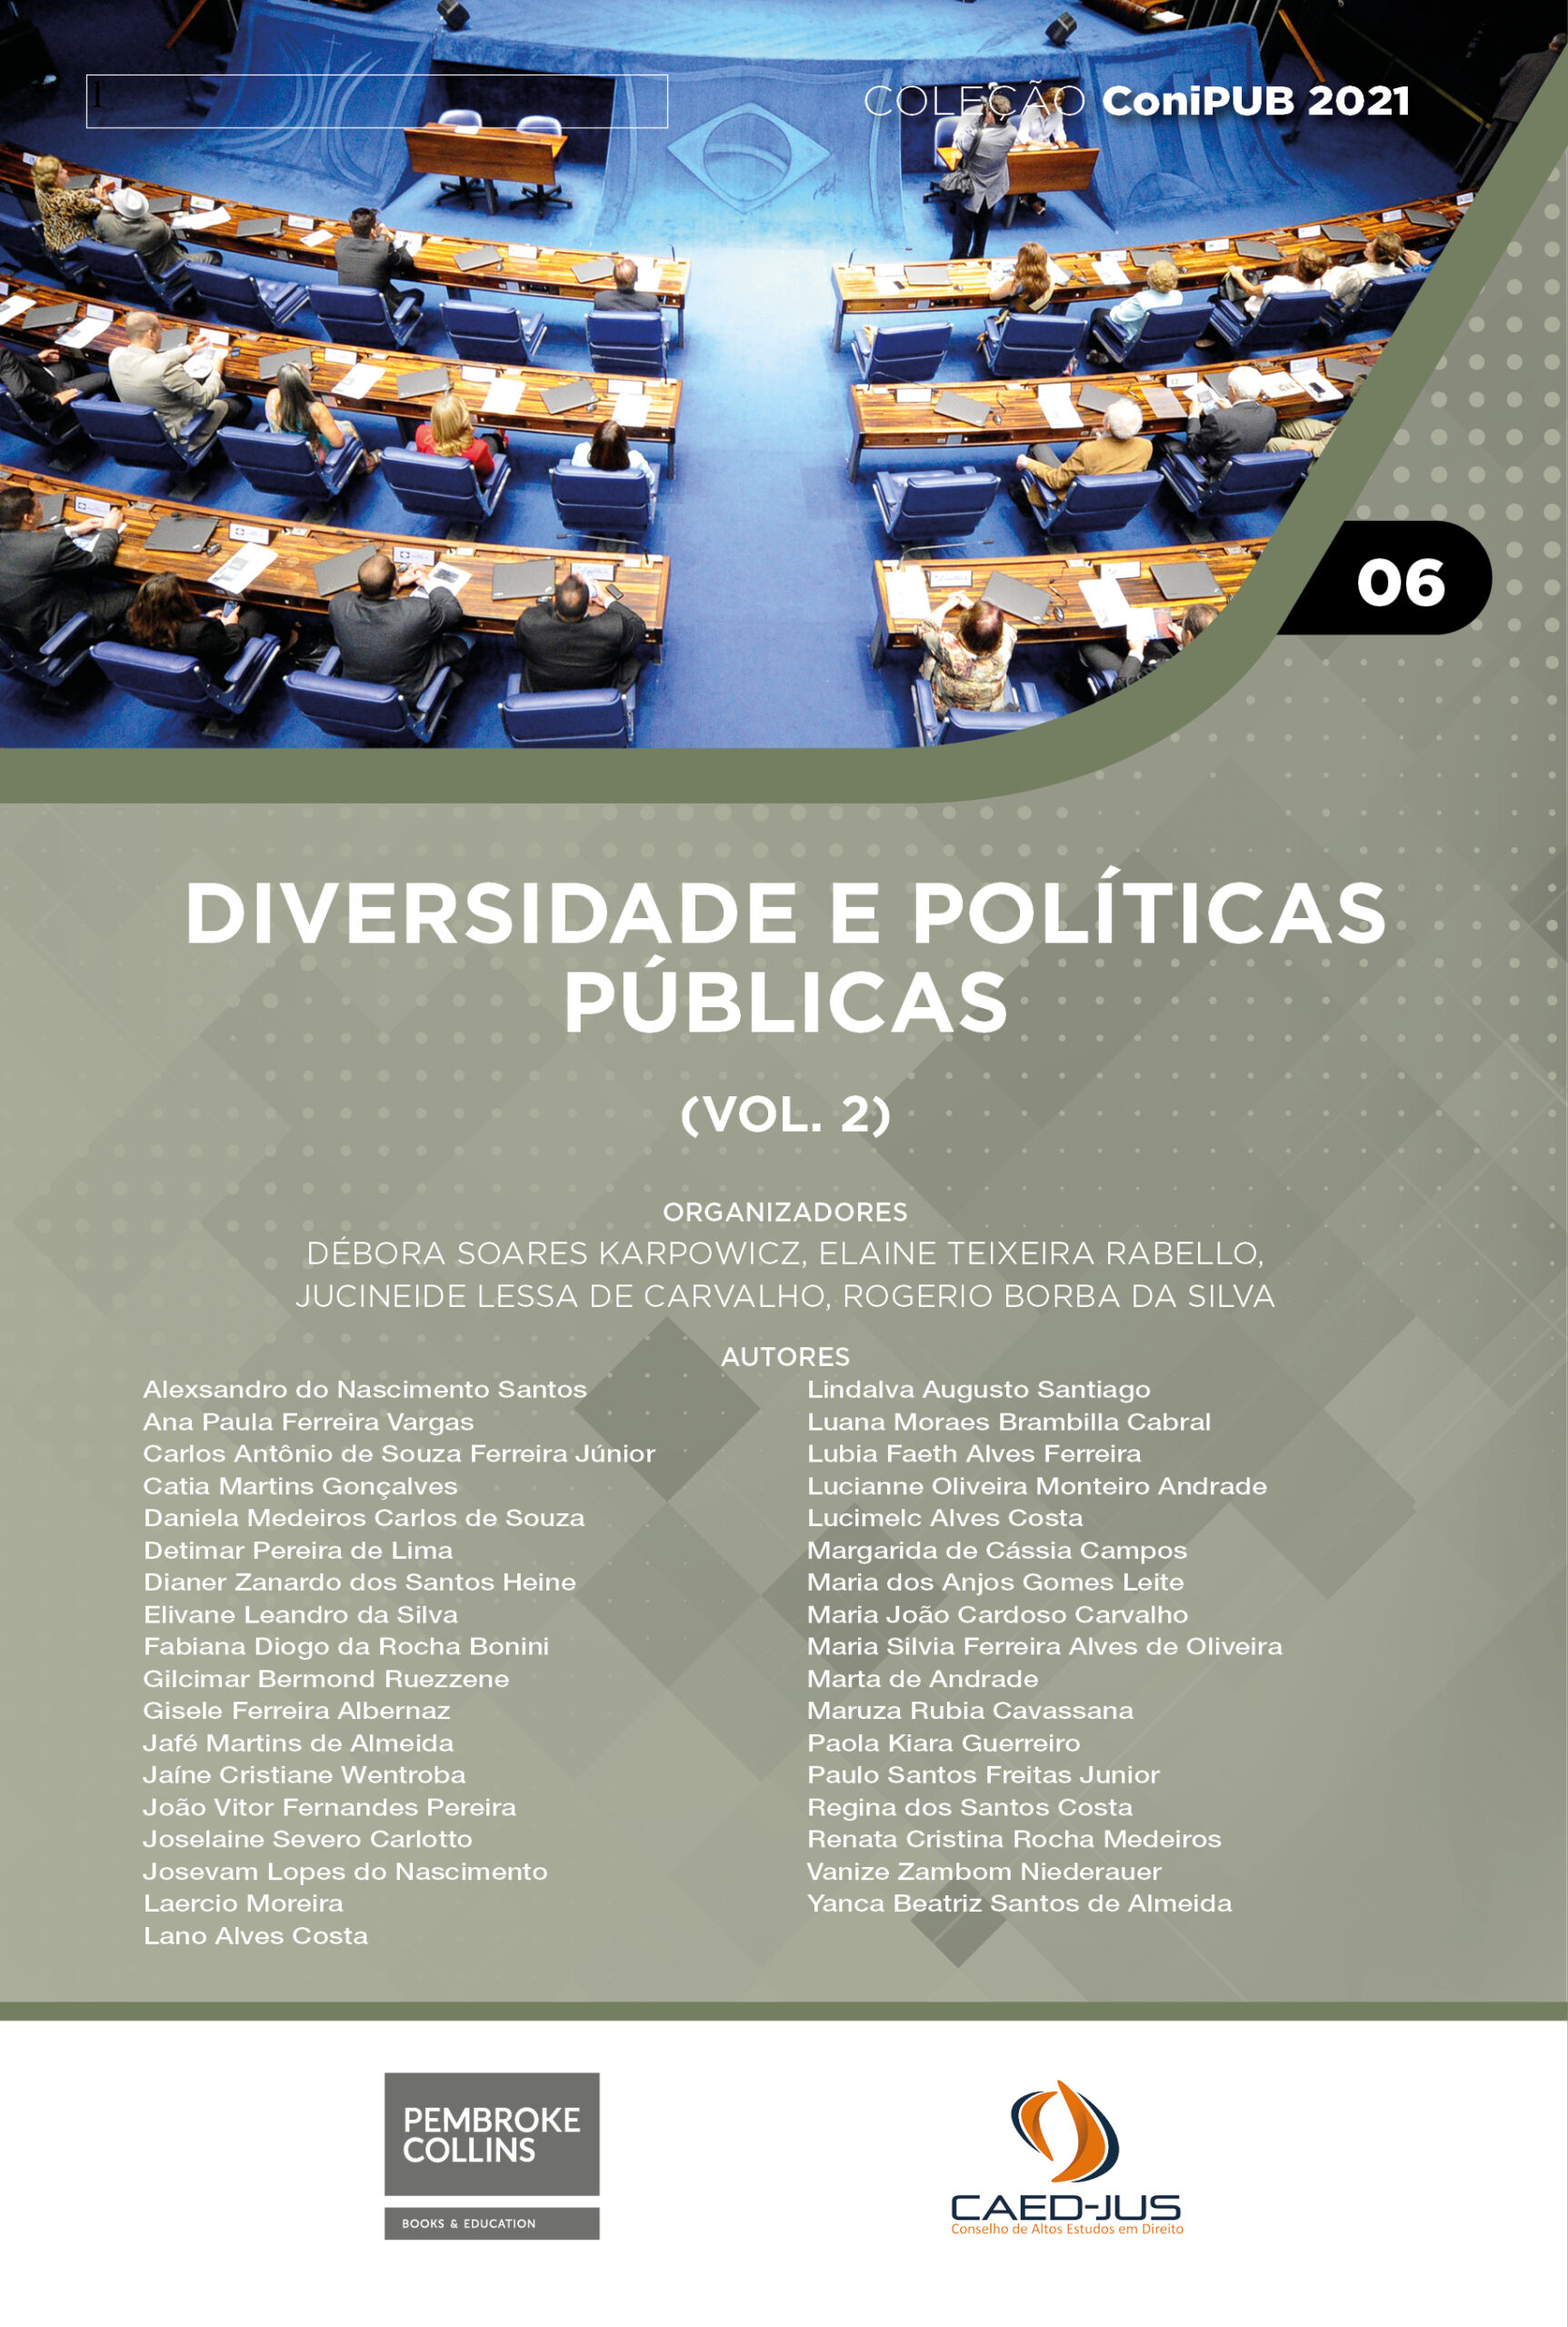 CONIPUB-2021-06-capa-Diversidade-e-politicas-publicas-vol-2-Pembroke-Collins